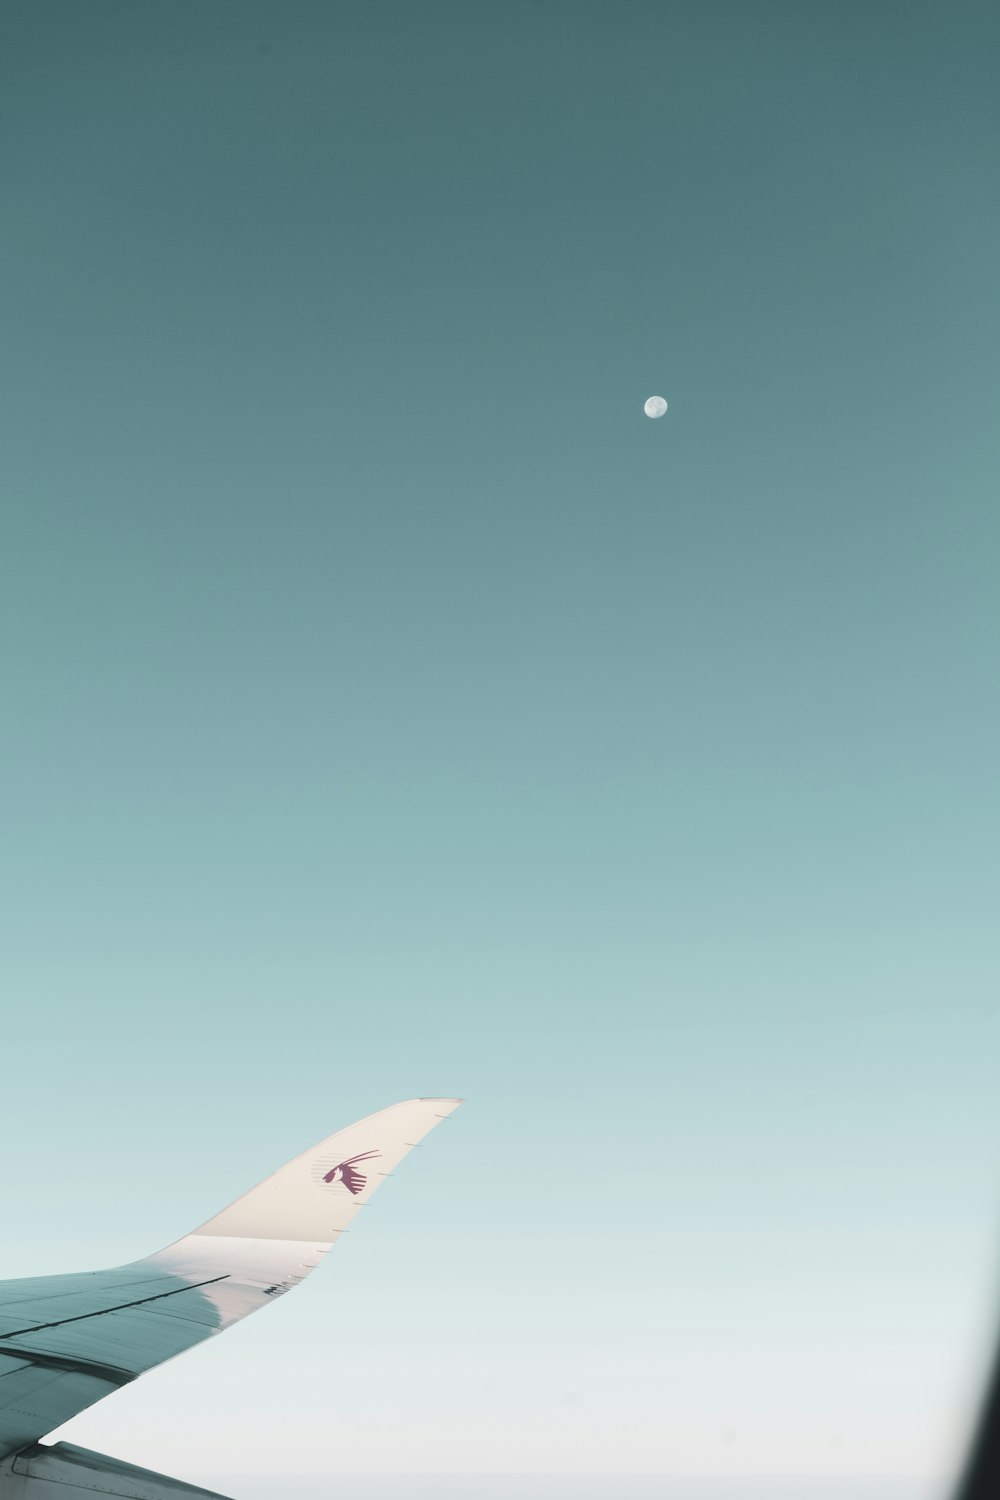 Qatar Airways Pictures | Download Free Images on Unsplash